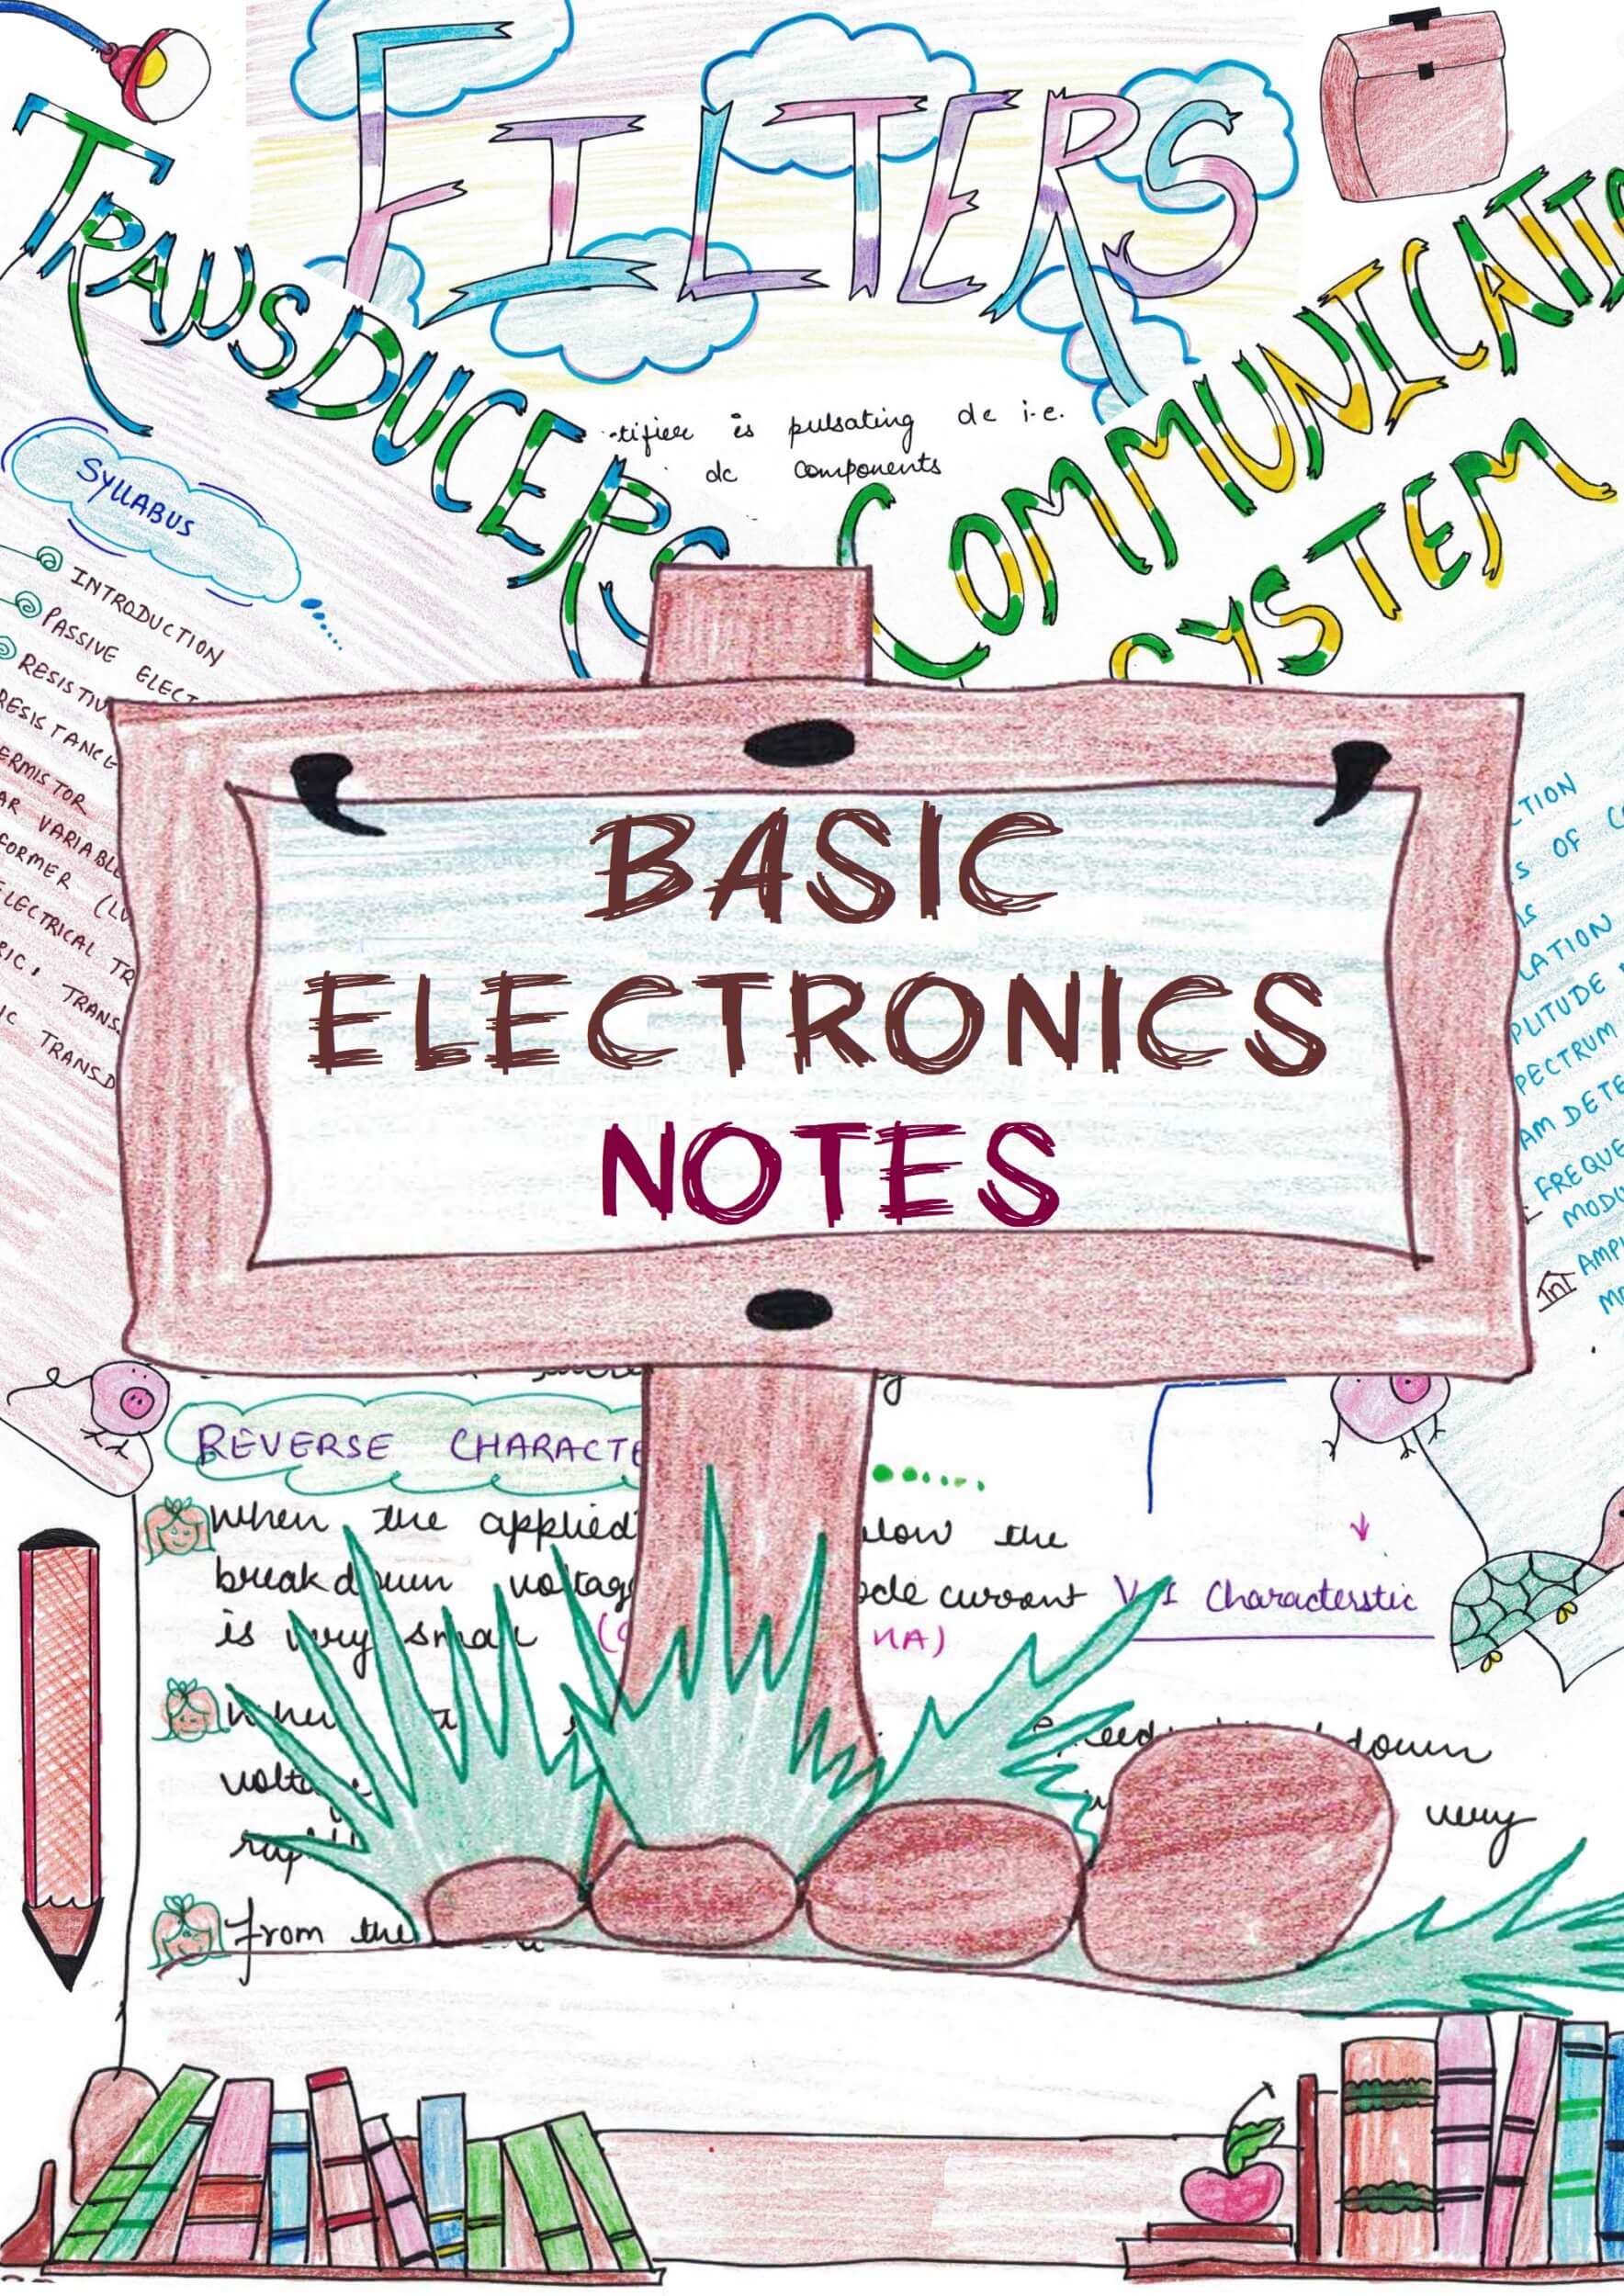 Electrical Machines Study Notes (HandWritten) PDF - Free Stuff